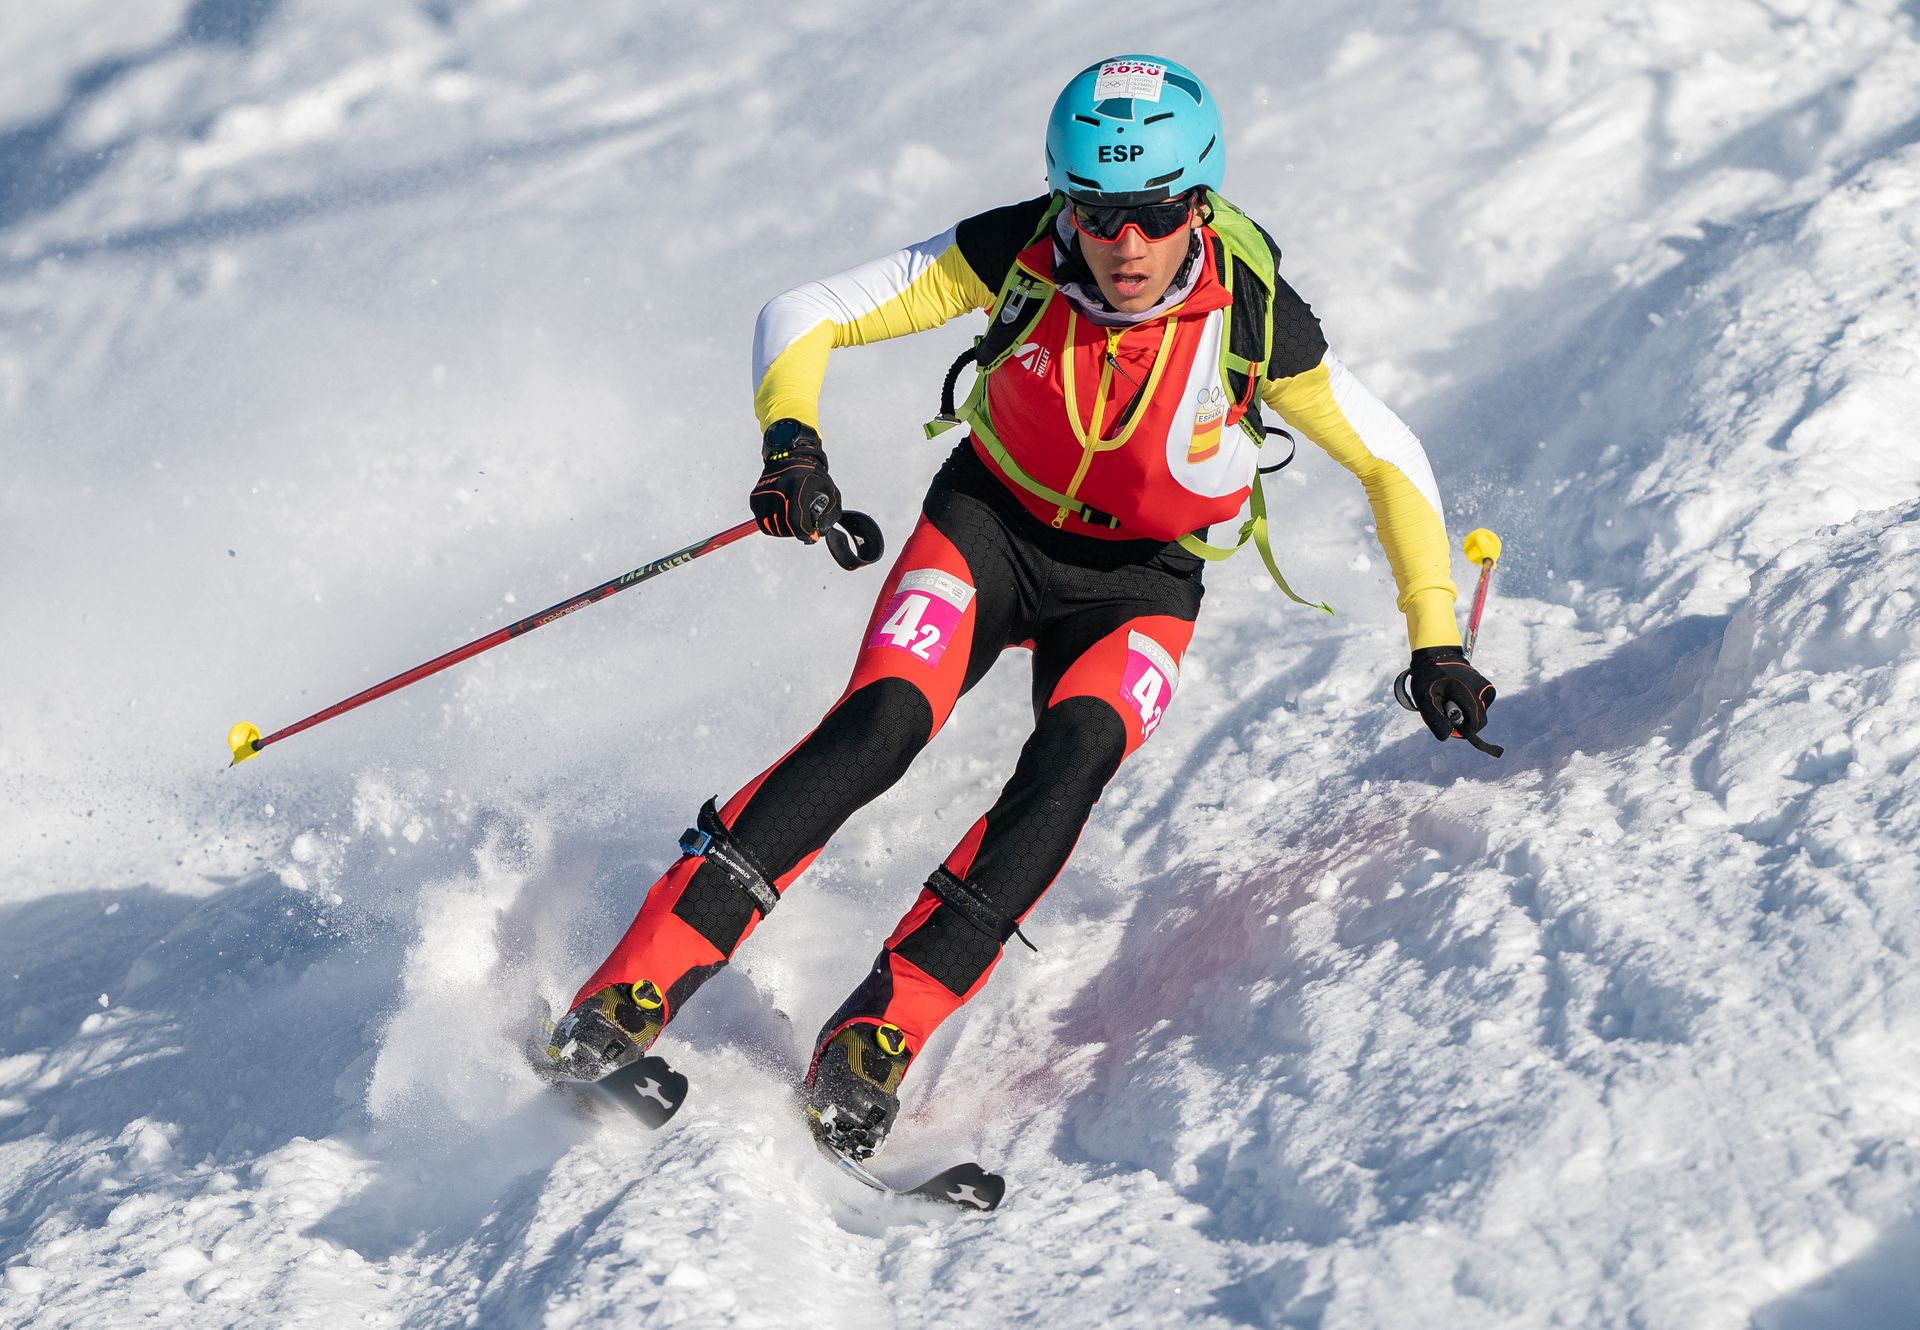 Relevos mixto español esqui montaña Lausana 2020